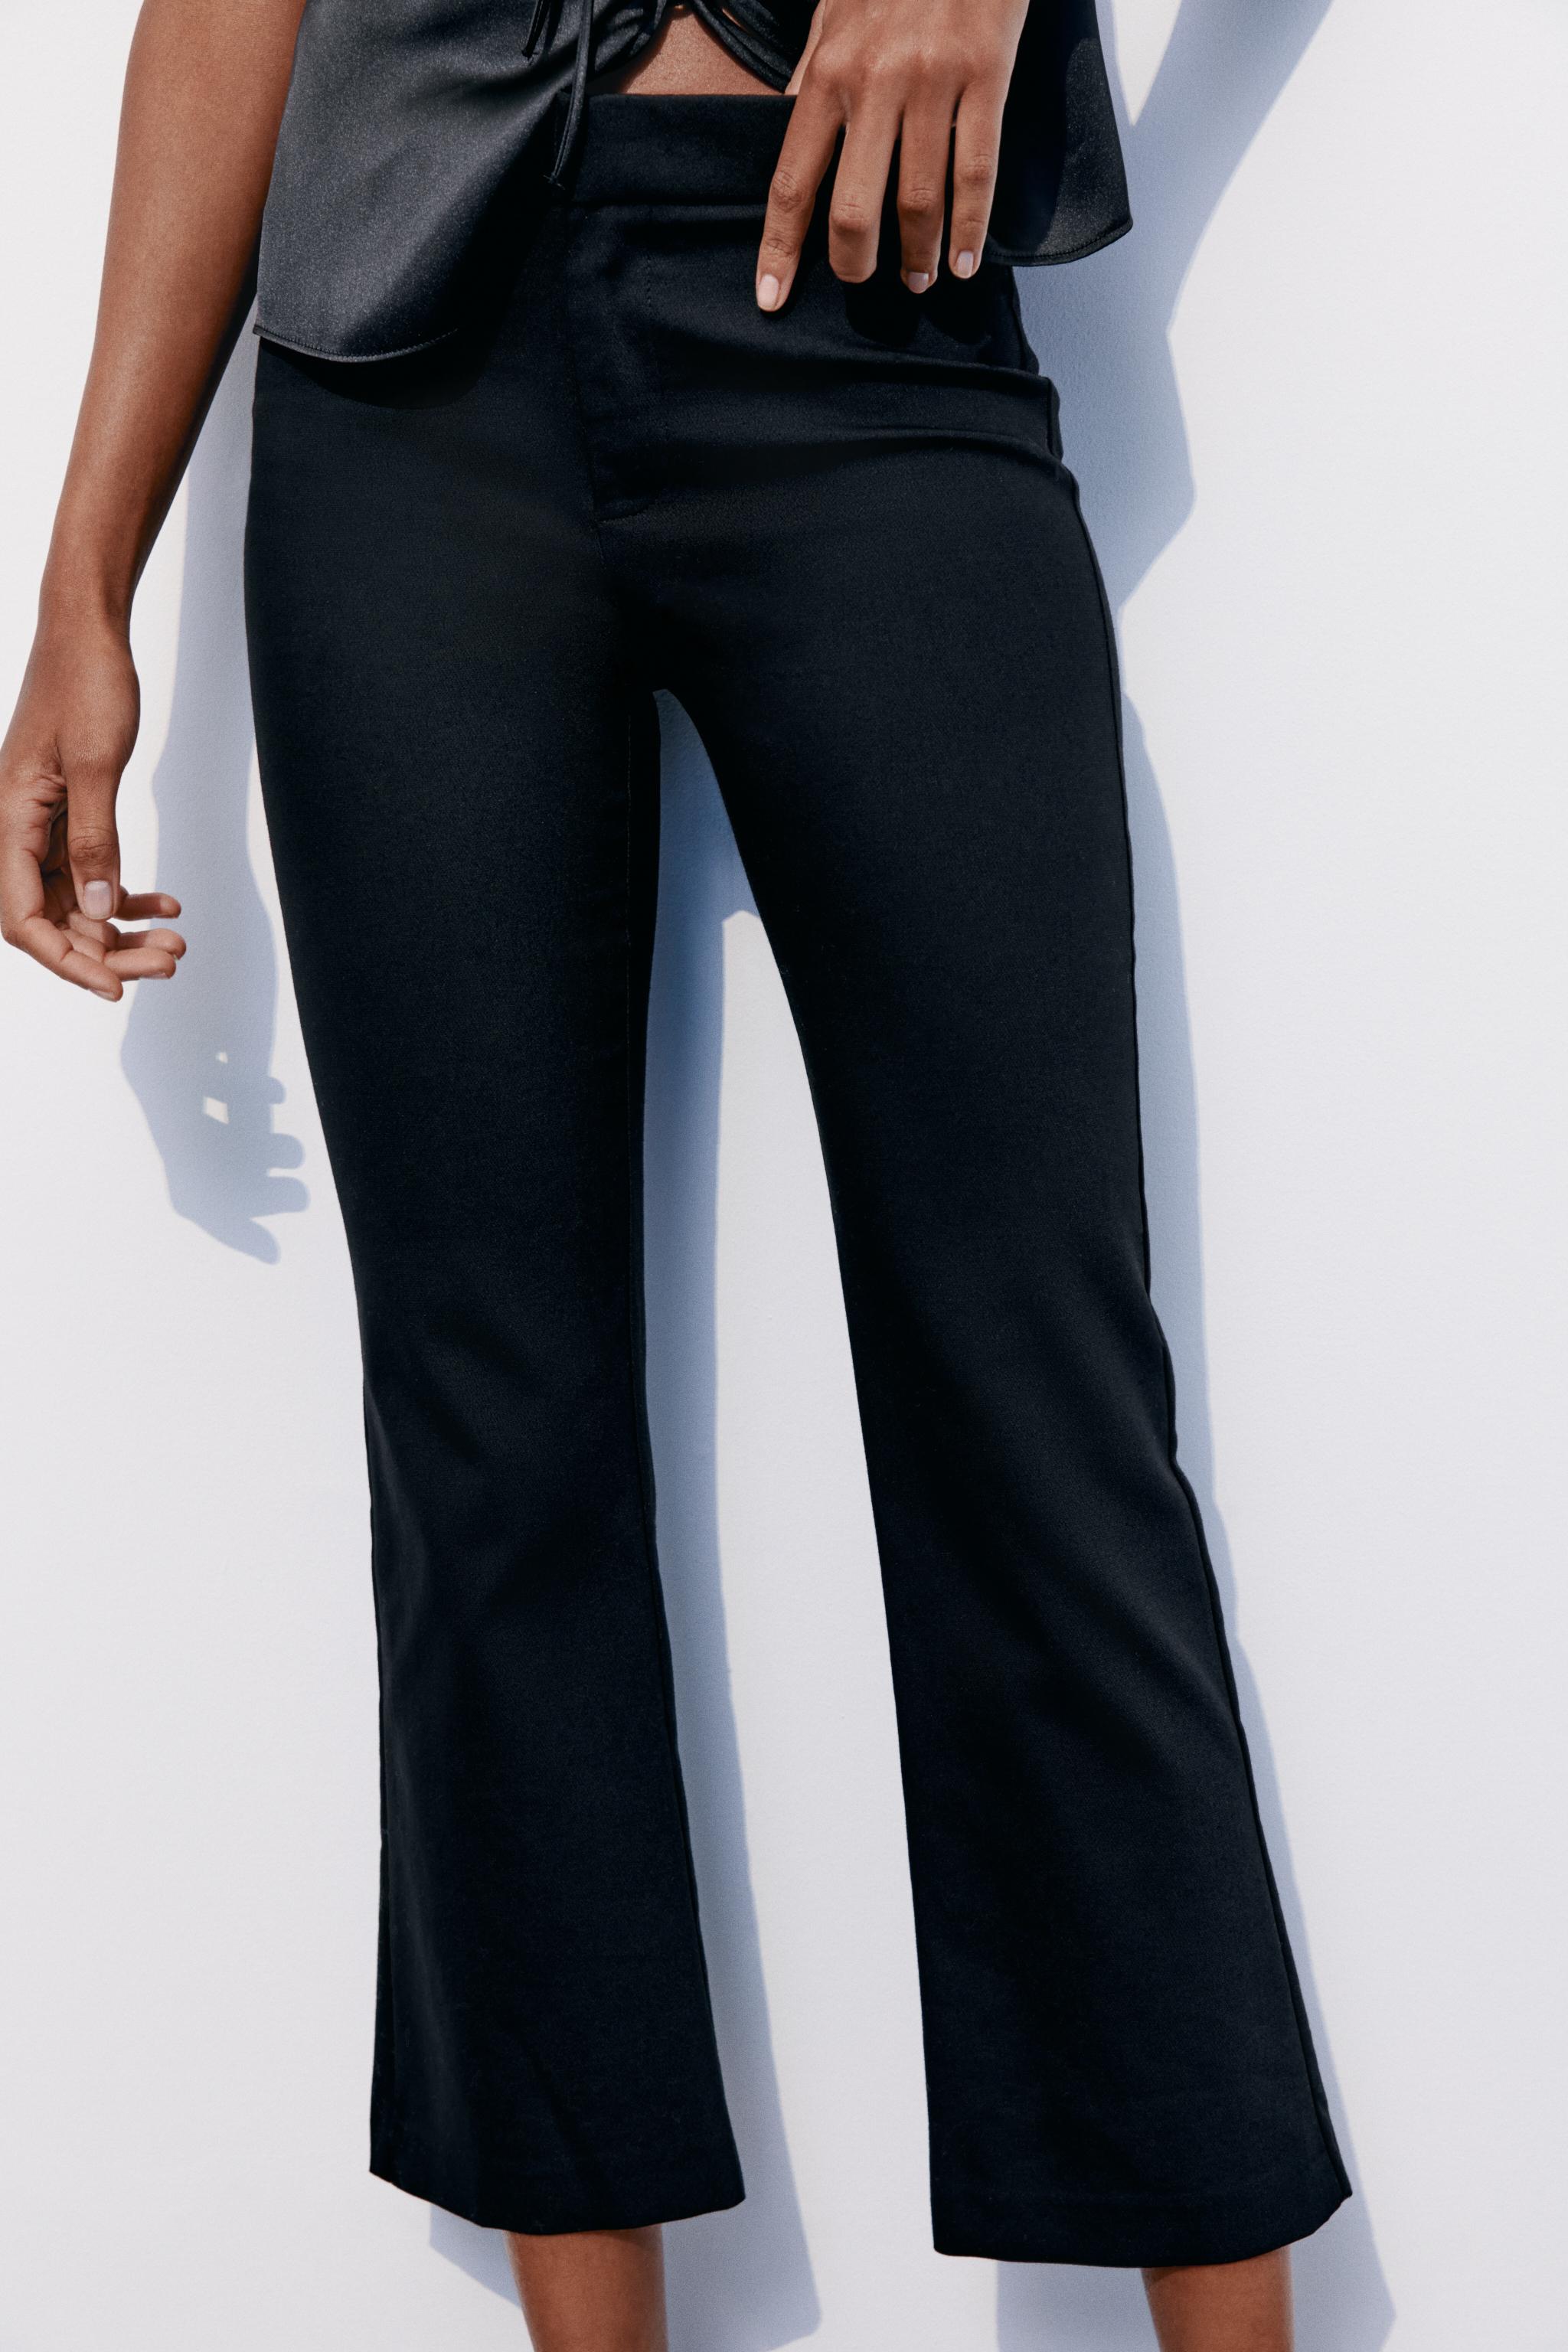 Zara Womens Biker Shorts Plaid Pants Black Size Extra Small Lot 2 - Shop  Linda's Stuff